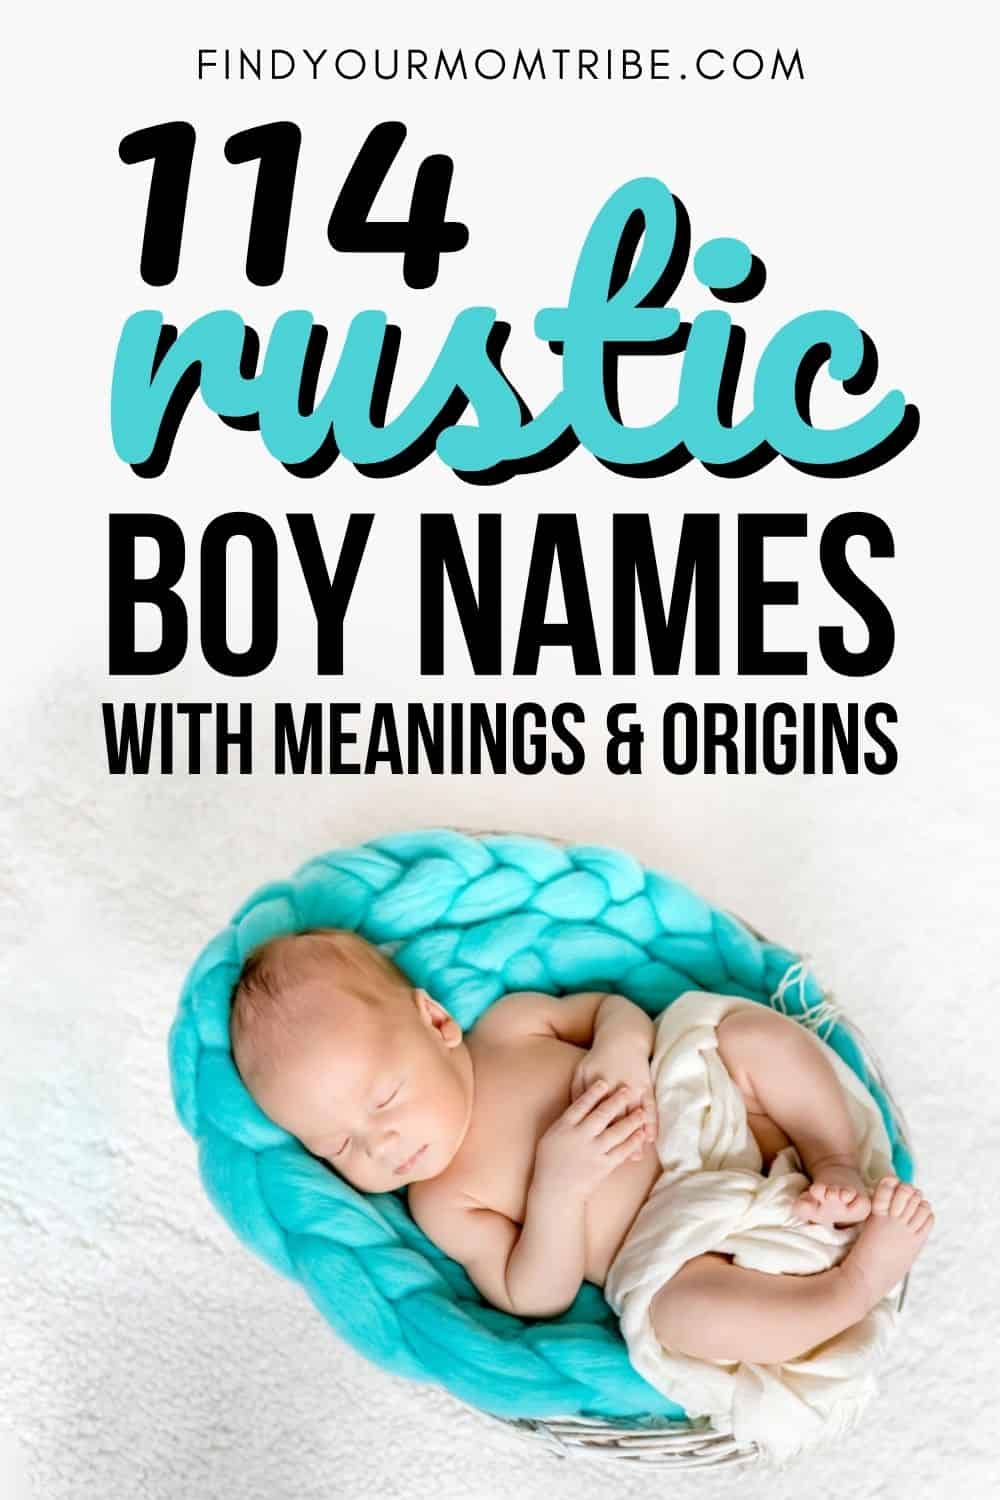 114 Rustic Boy Names Pinterest